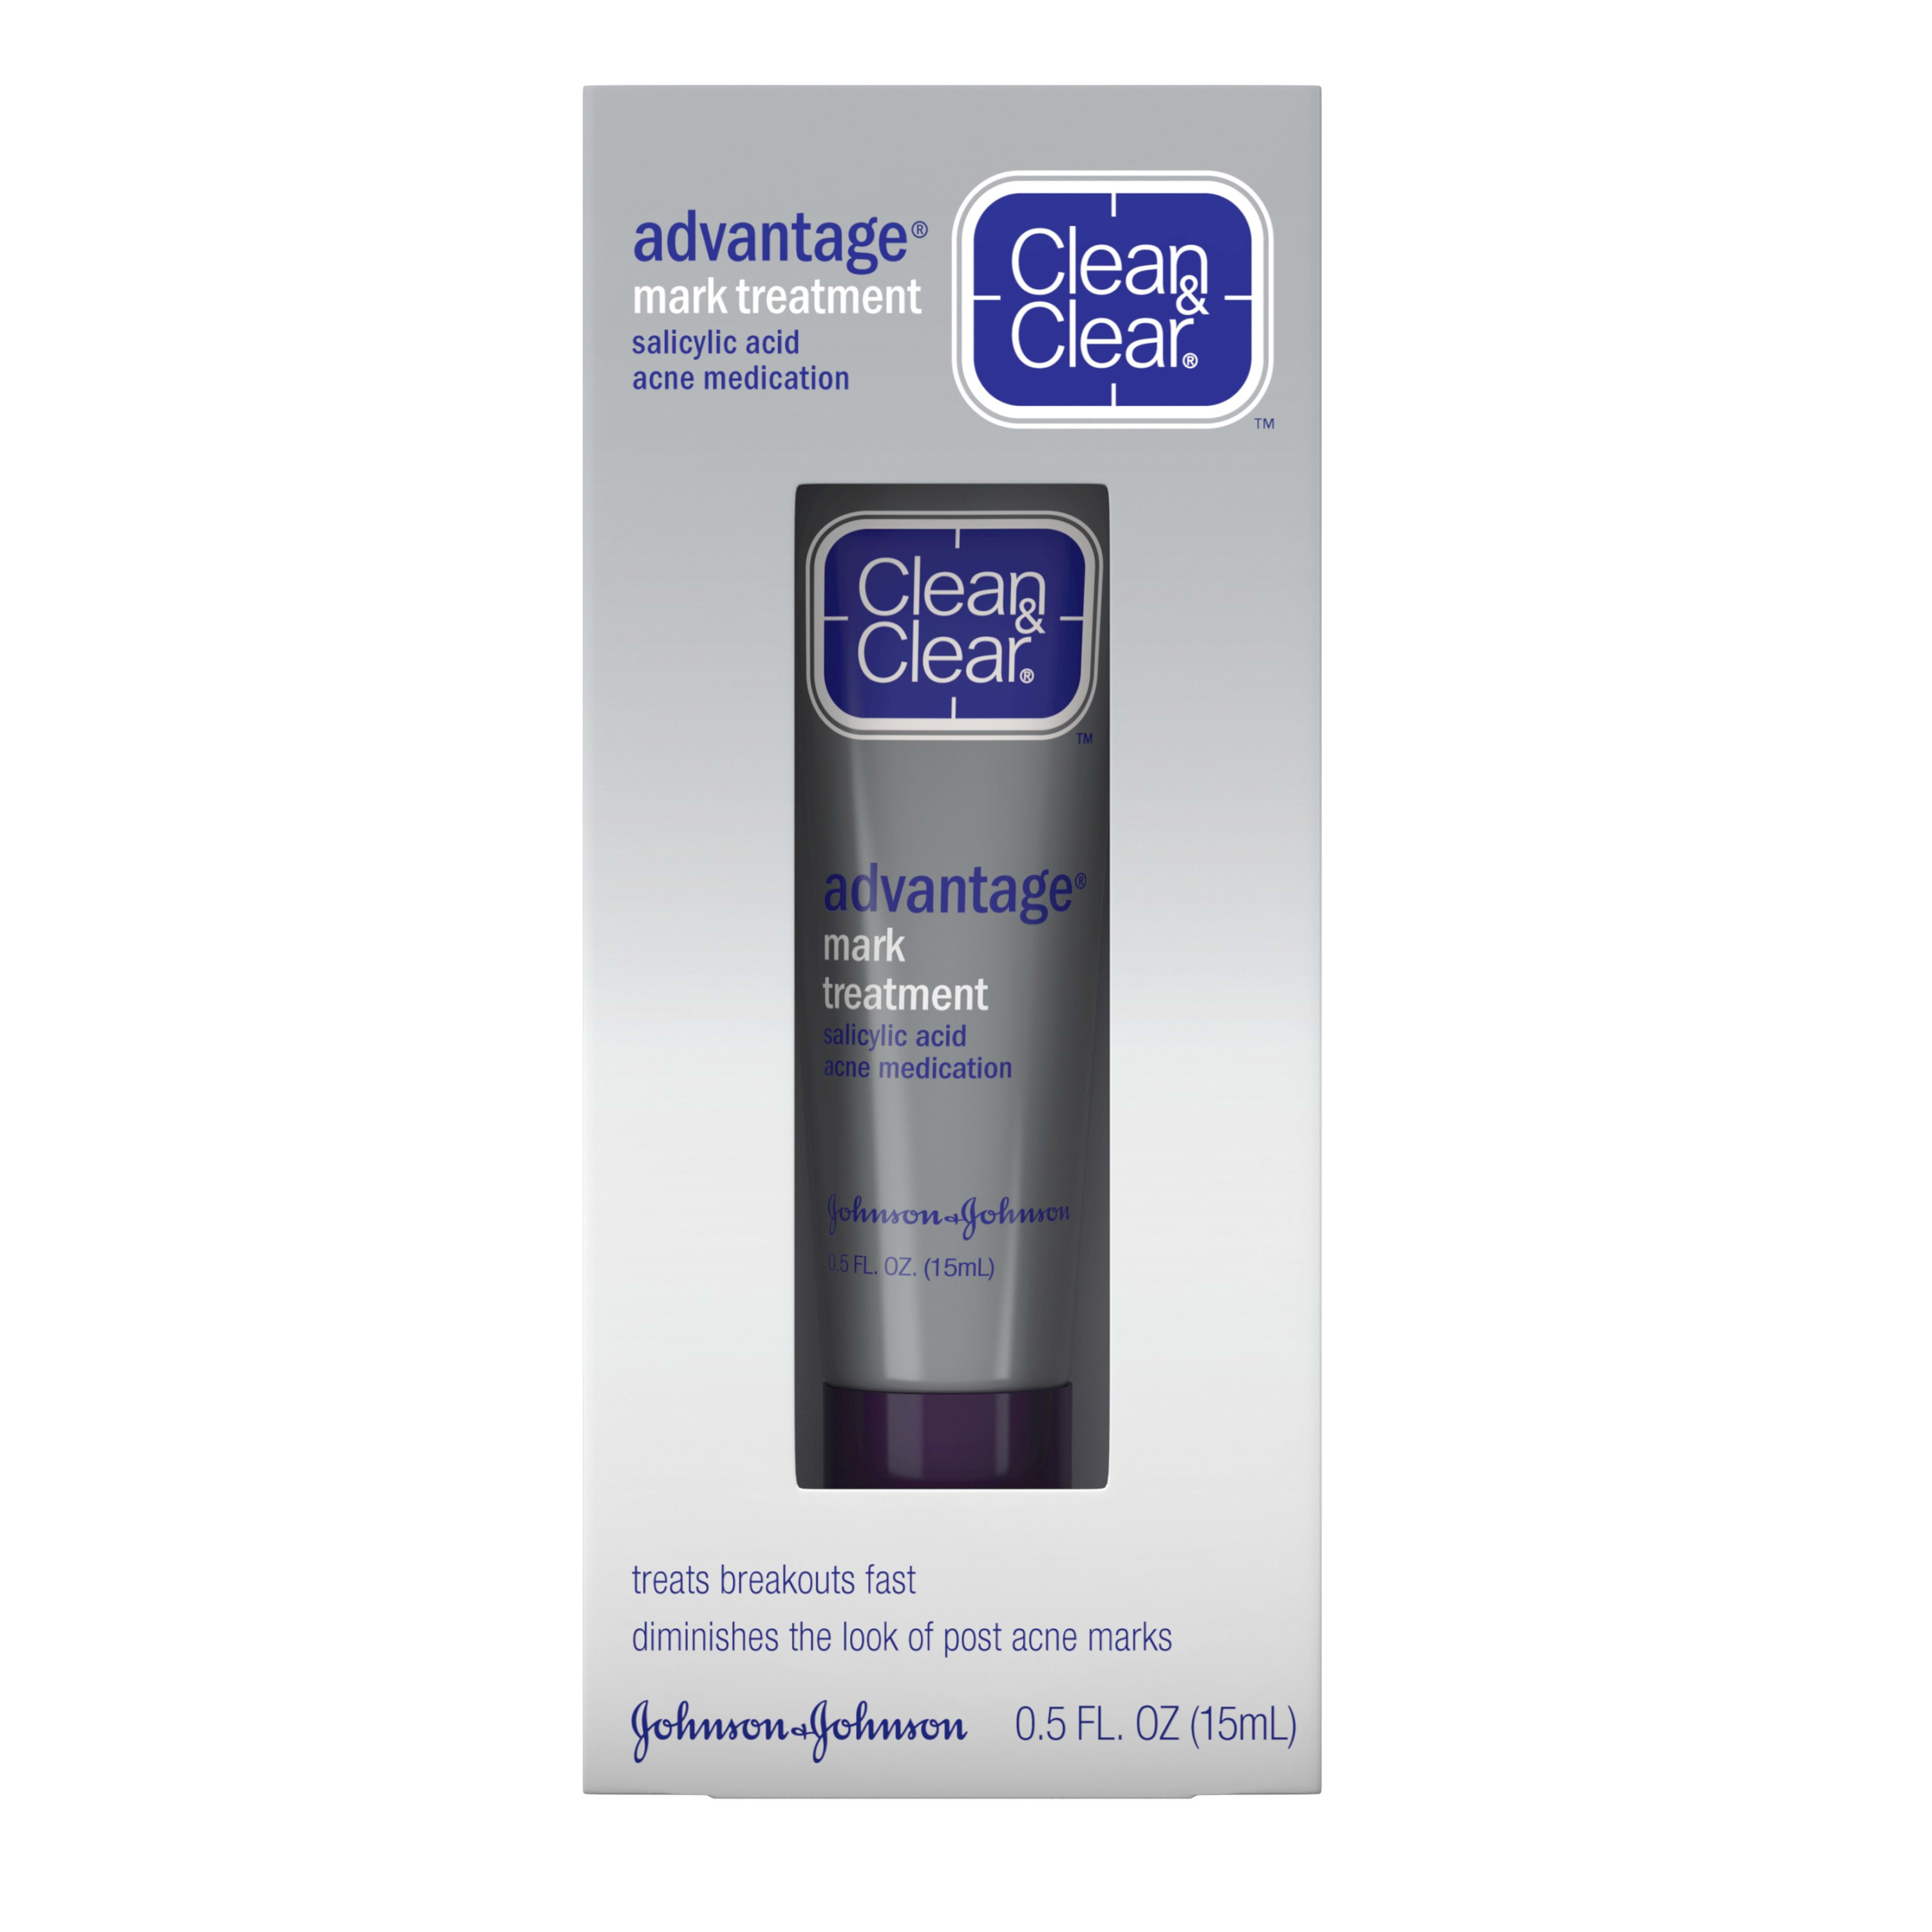 Clean & Clear Advantage Acne Mark Treatment with Salicylic Acid.5 oz - image 2 of 9